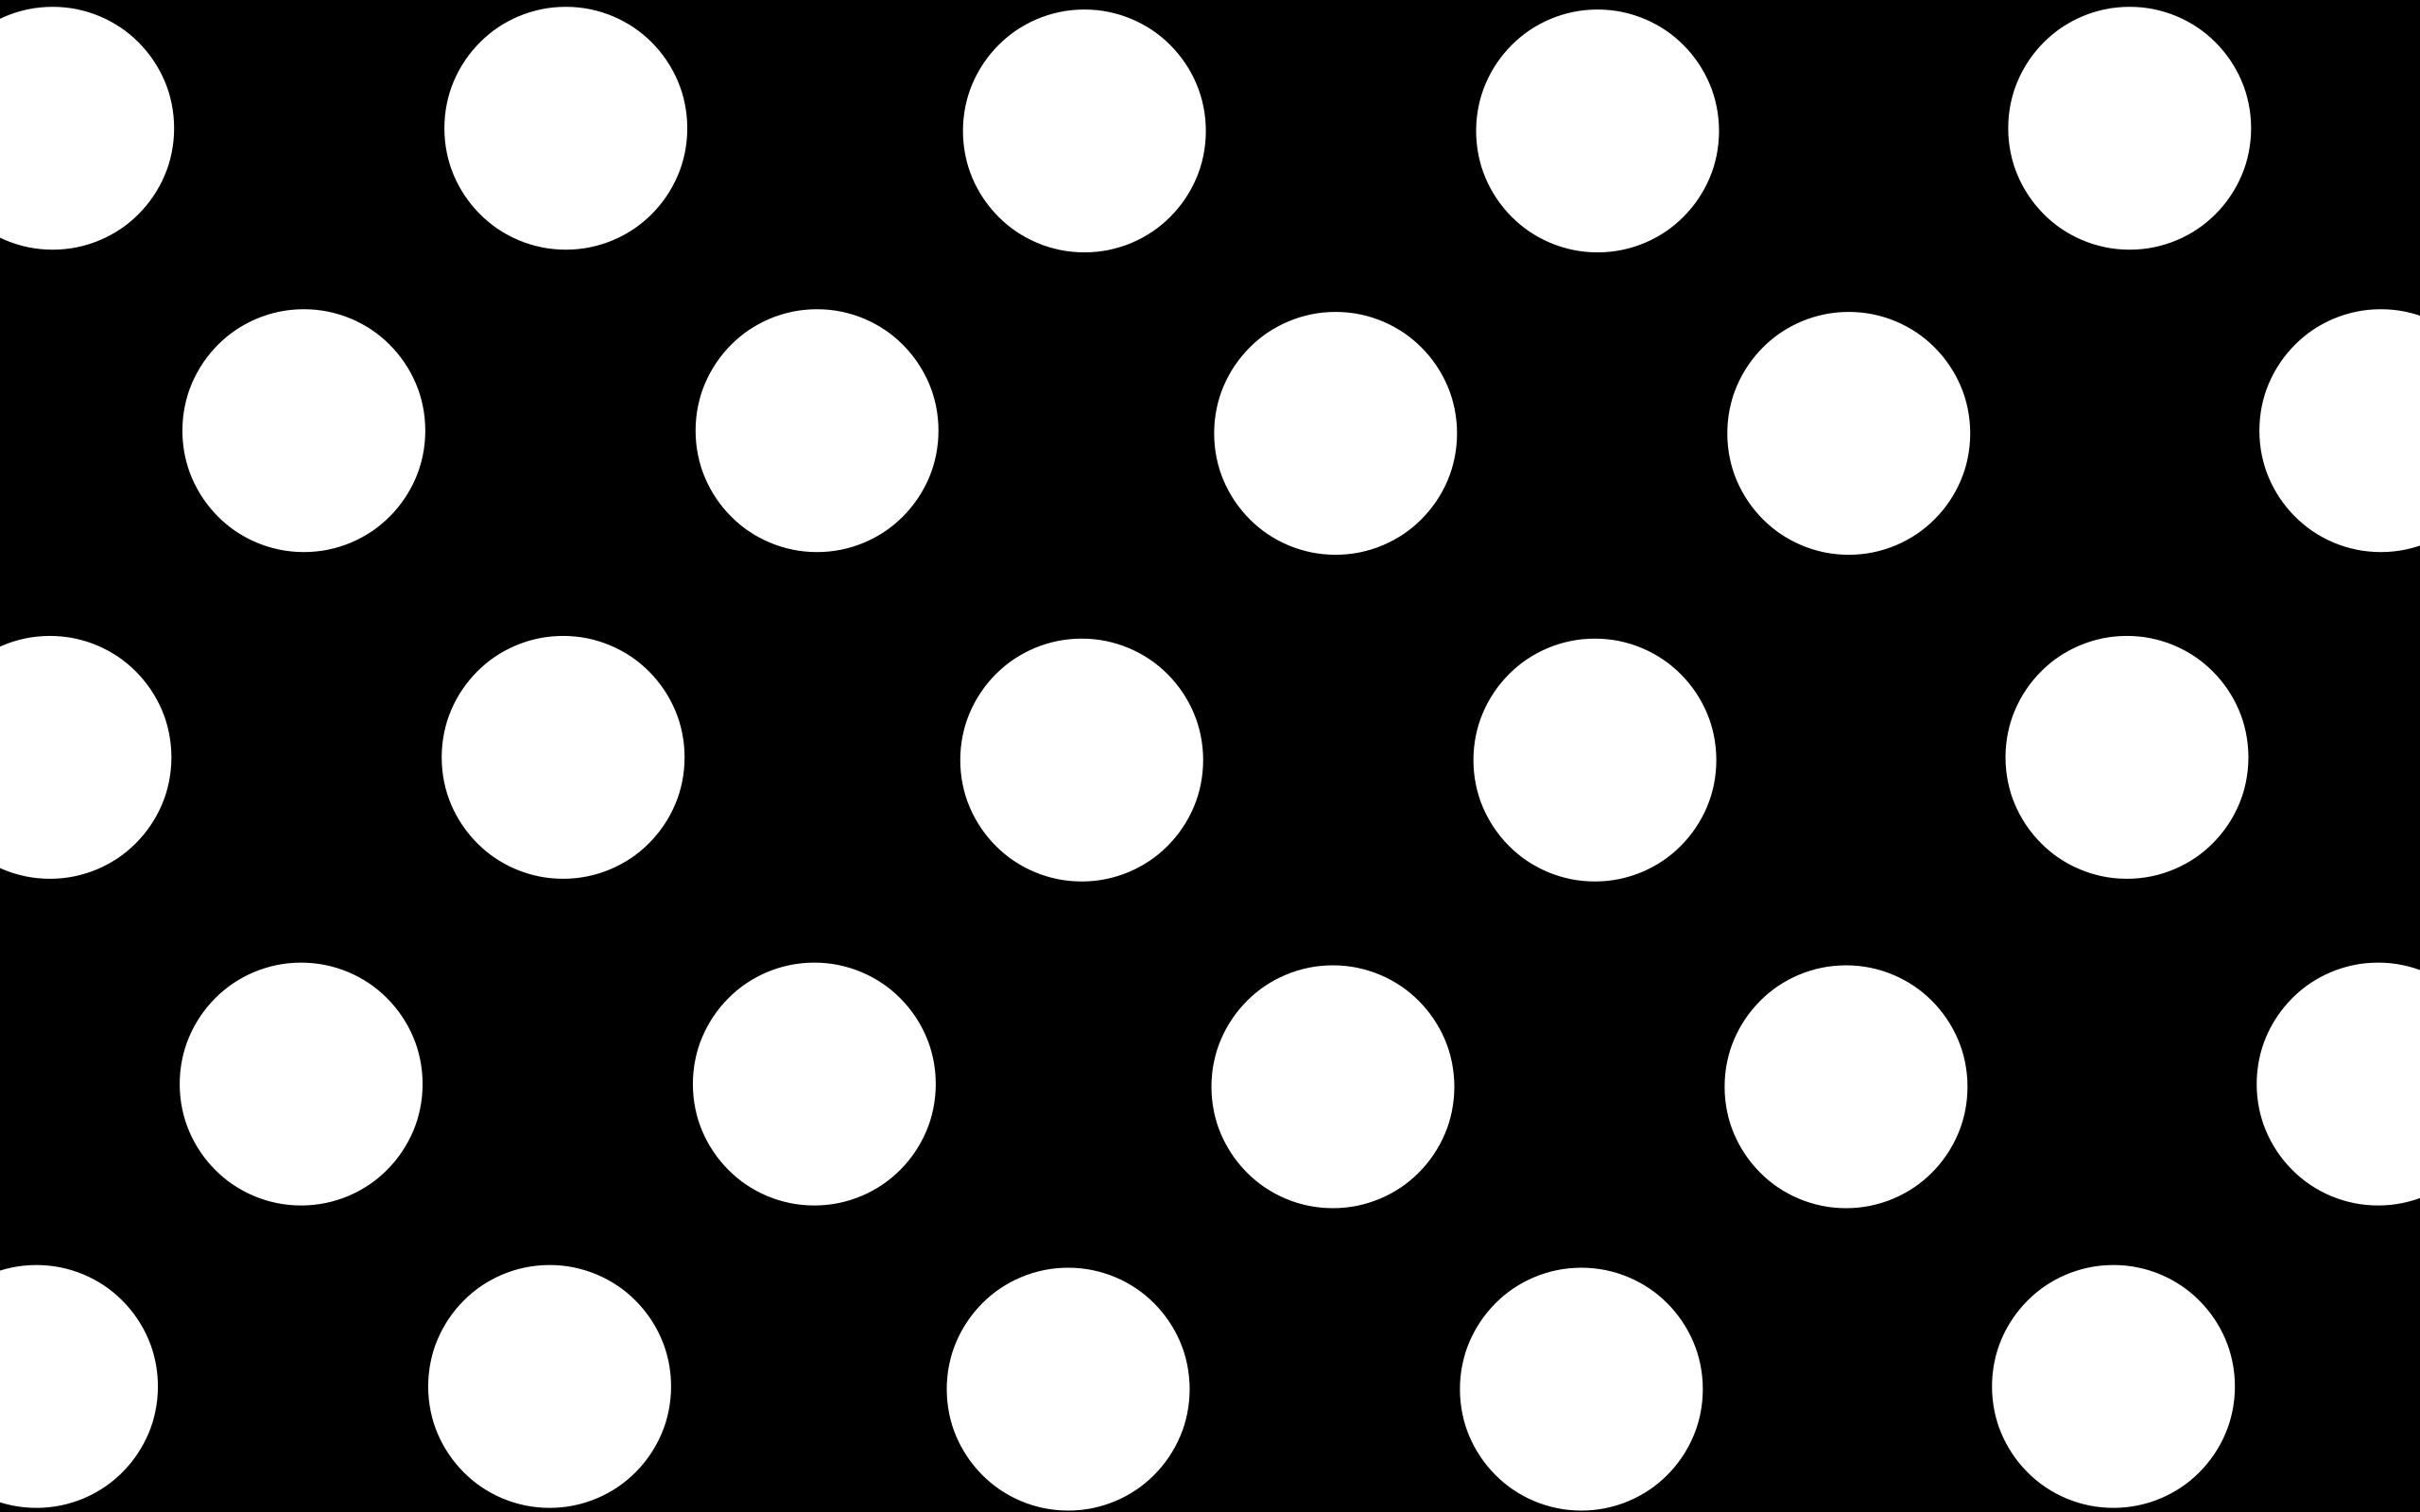 Black and White Polka Dot Nail Designs on Pinterest - wide 10